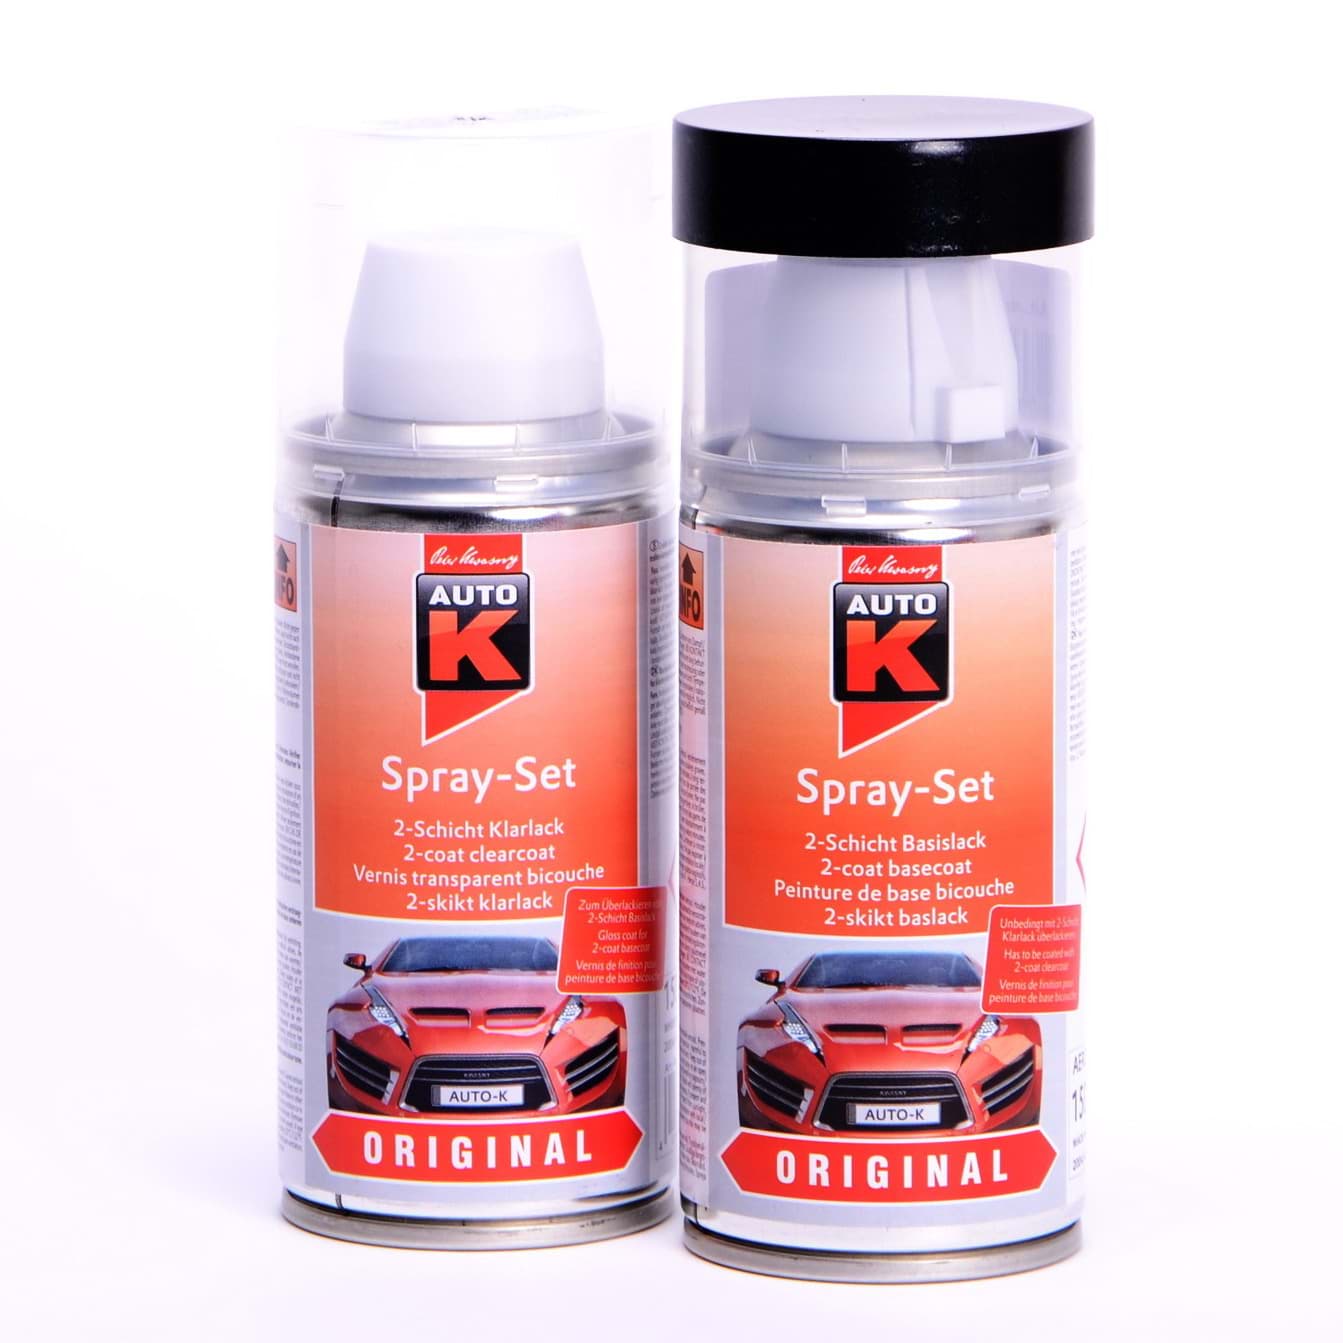 Afbeelding van Auto-K Spray-Set Autolack für Opel 291 Ardenblau met 21439